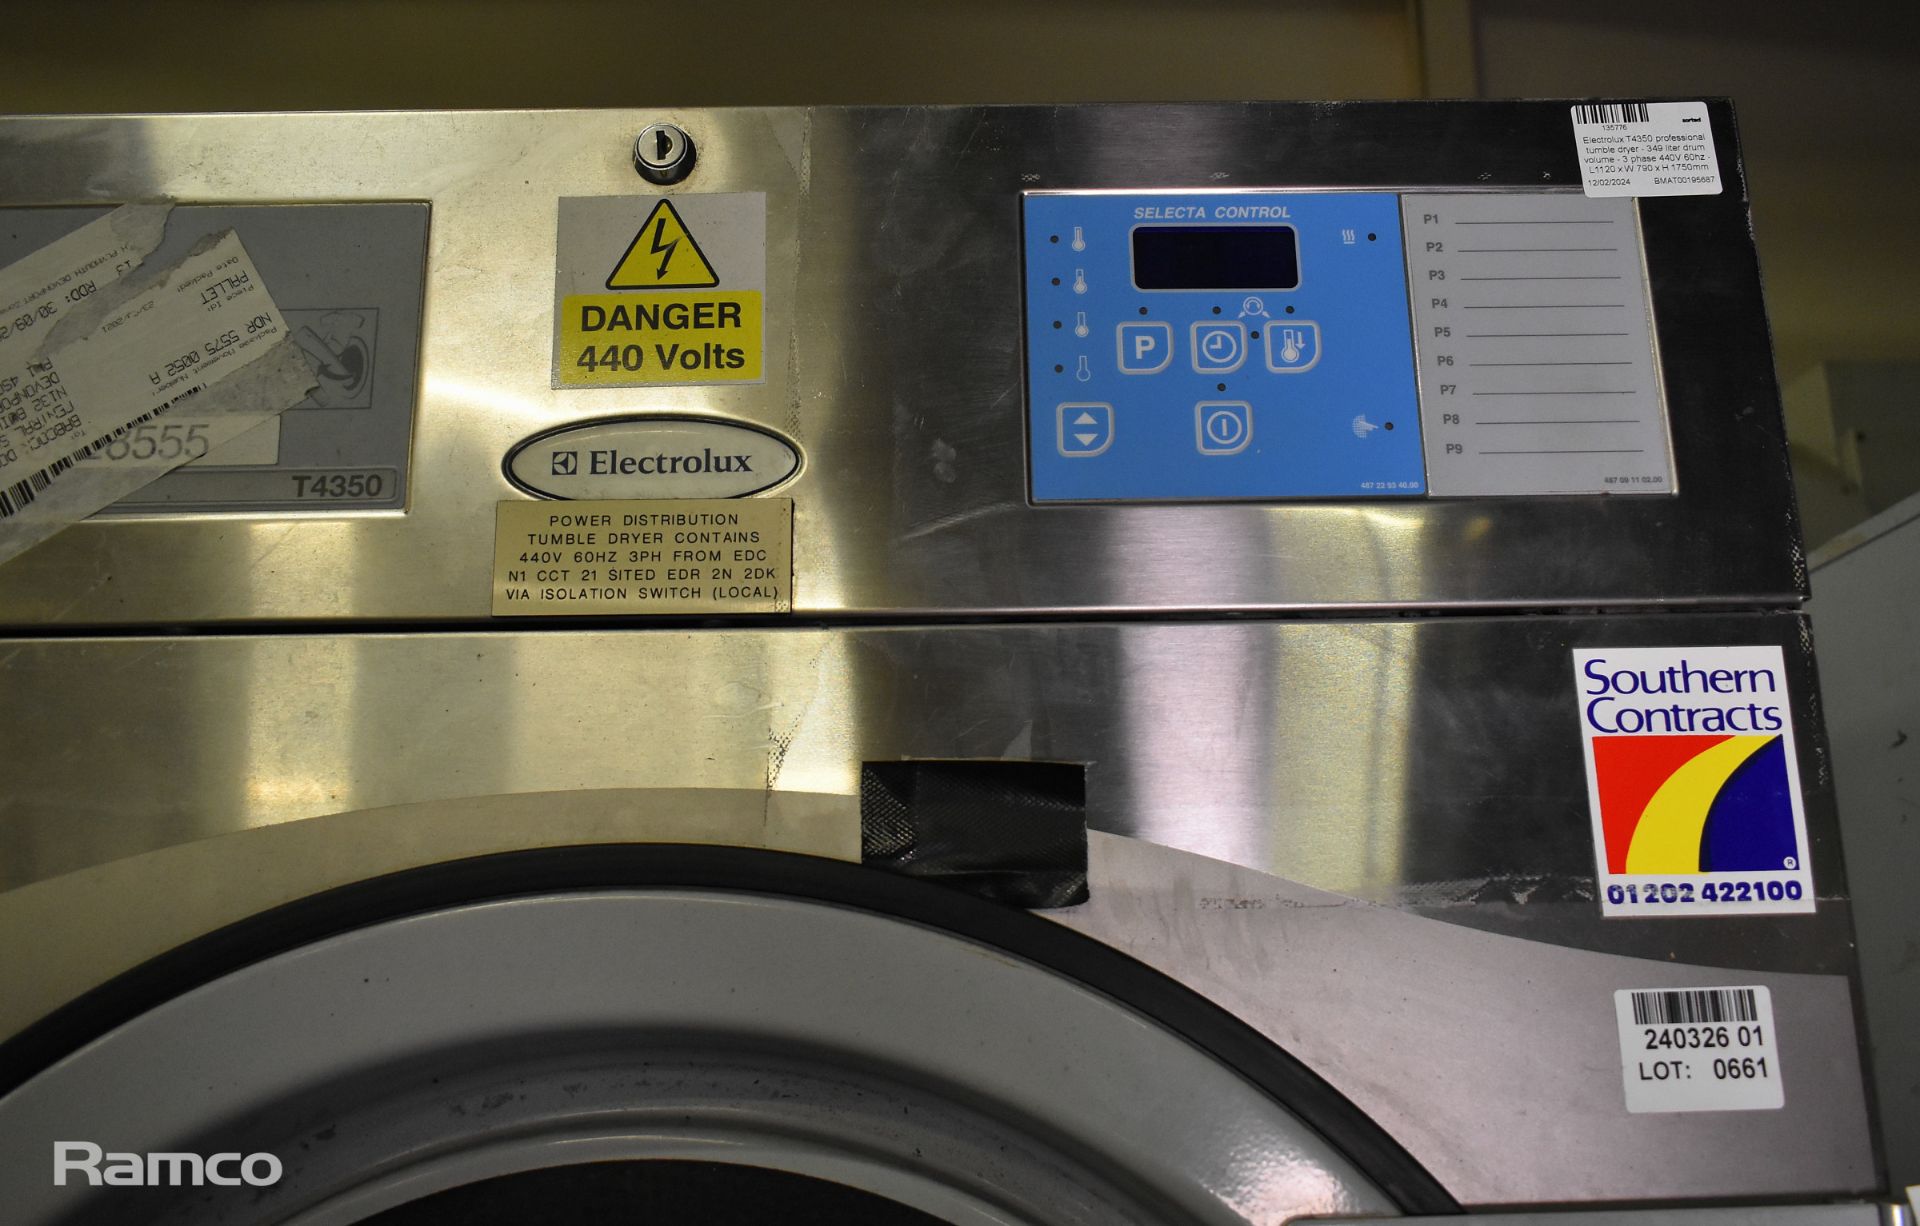 Electrolux T4350 professional tumble dryer - 349 litre drum volume - 3 phase 440V 60Hz - Image 7 of 7